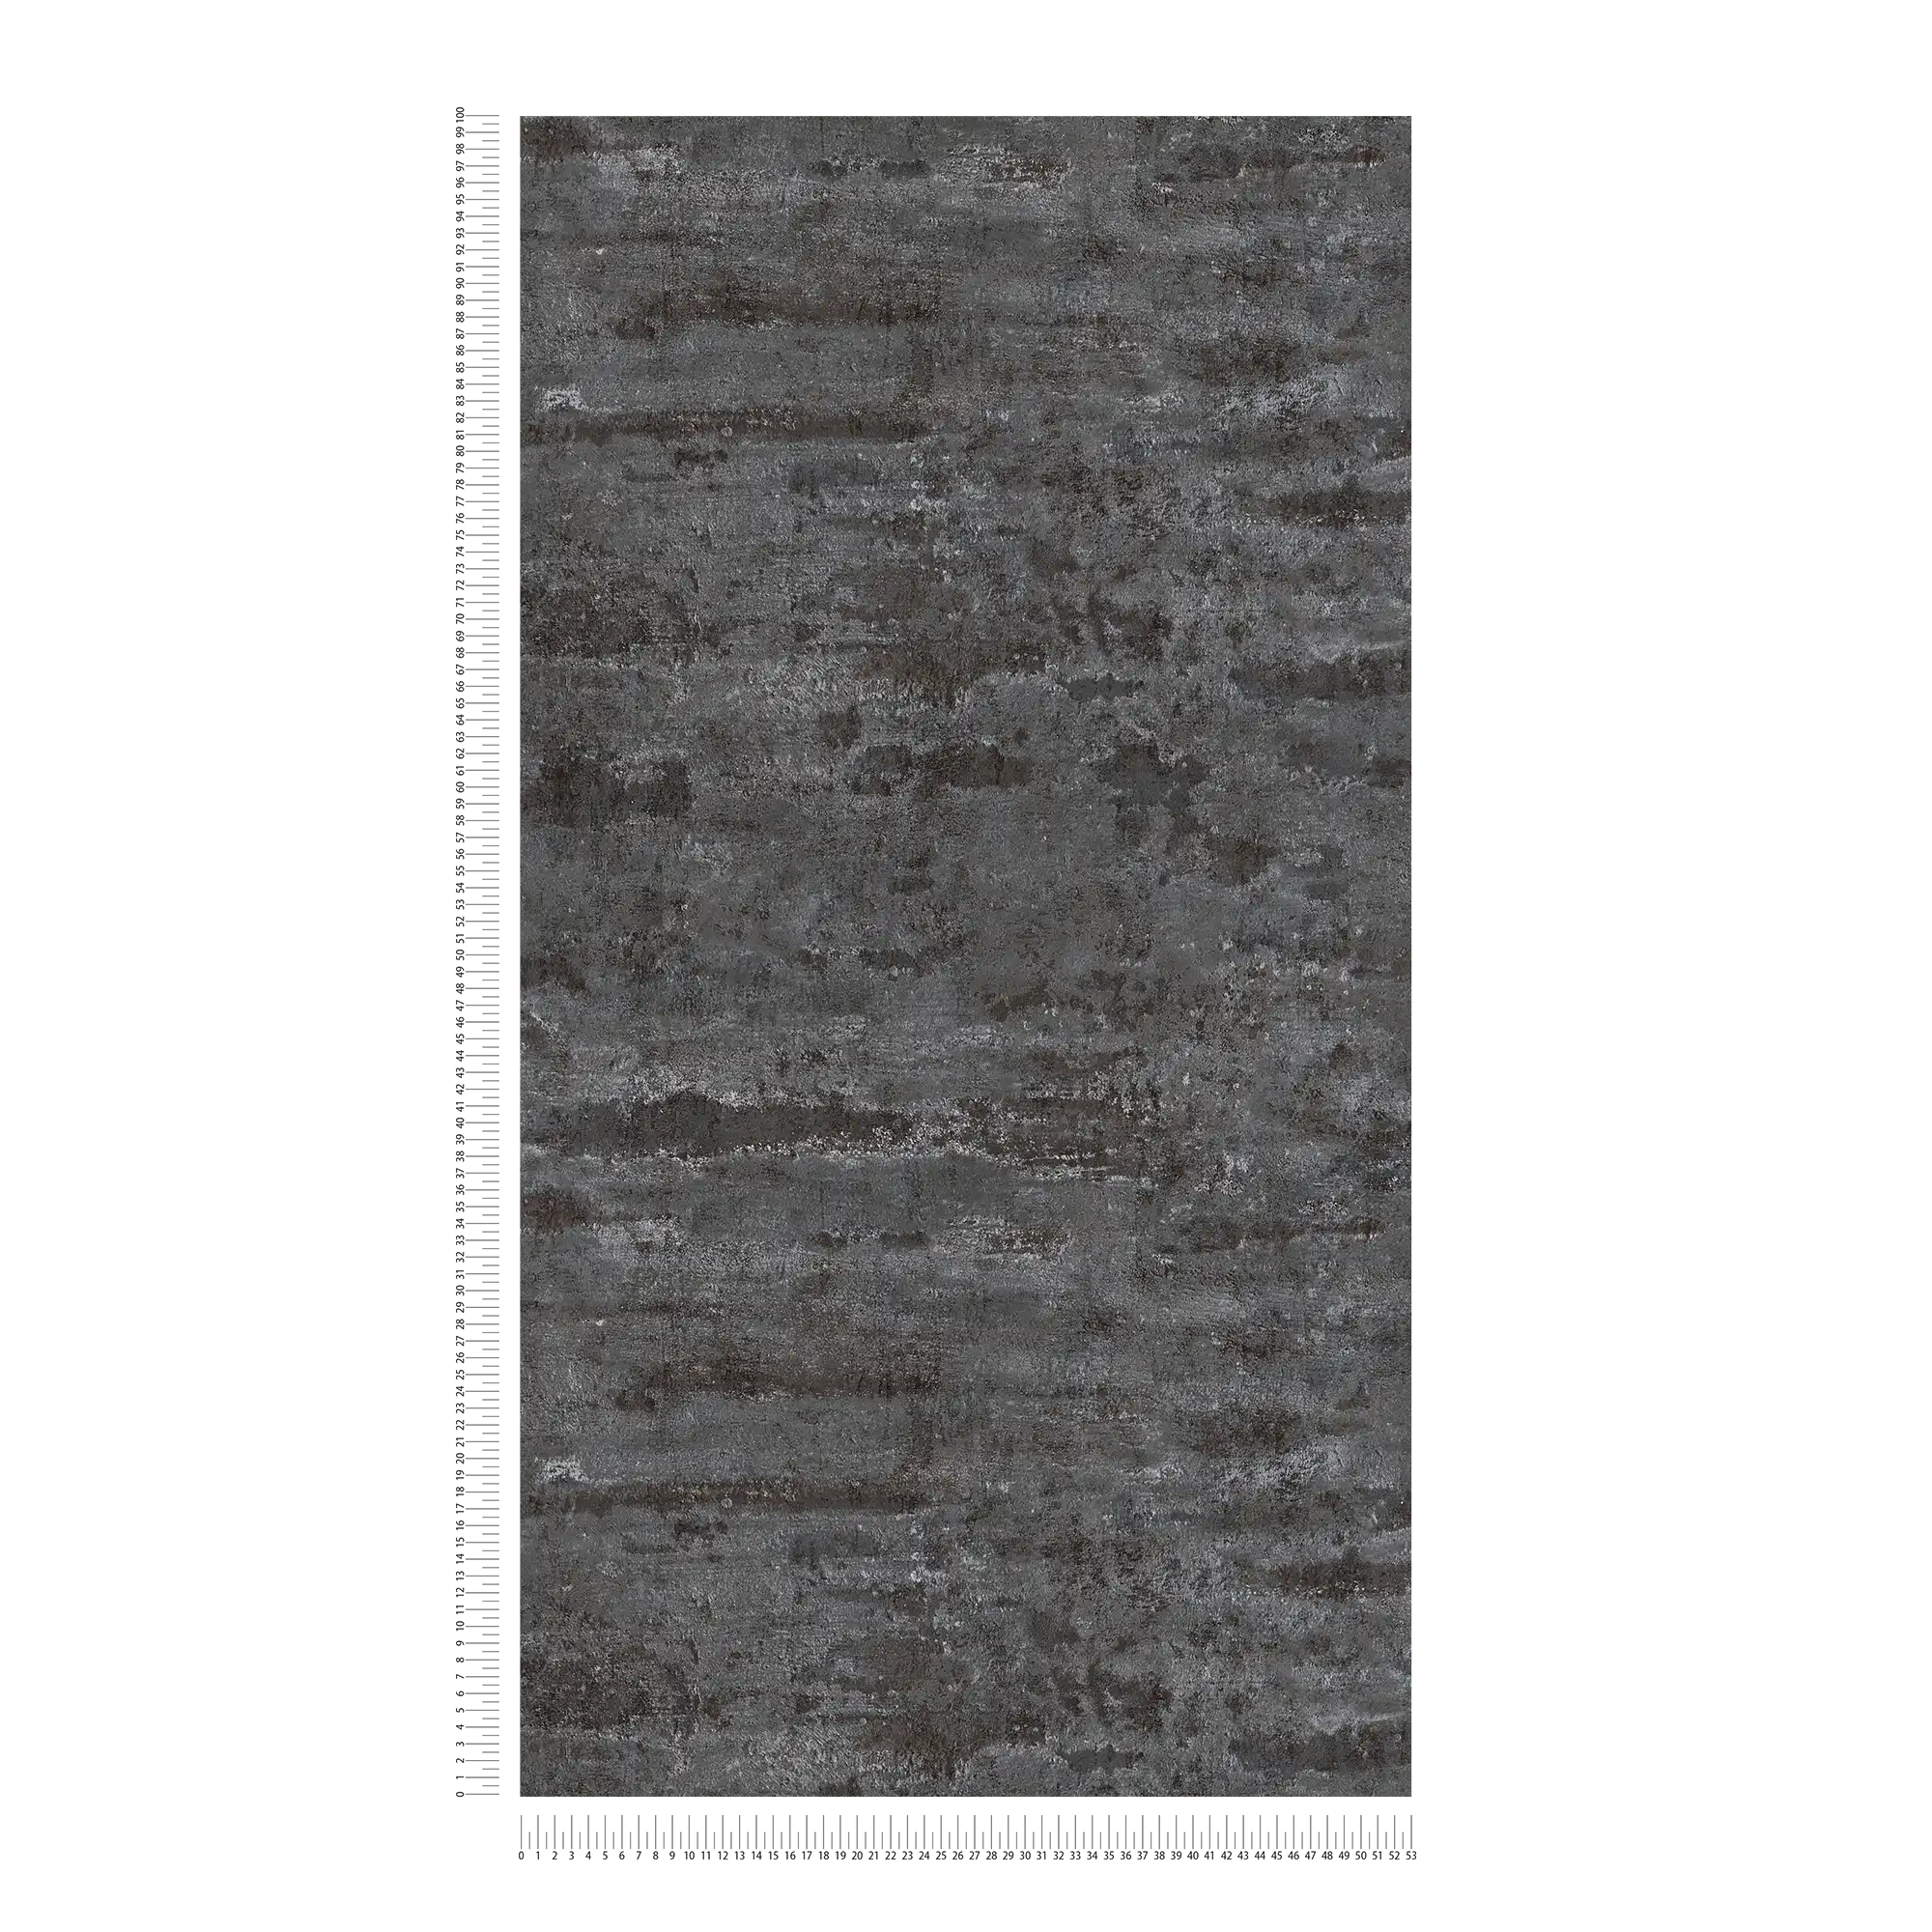             Non-woven wallpaper rustic pattern, plaster look - black
        